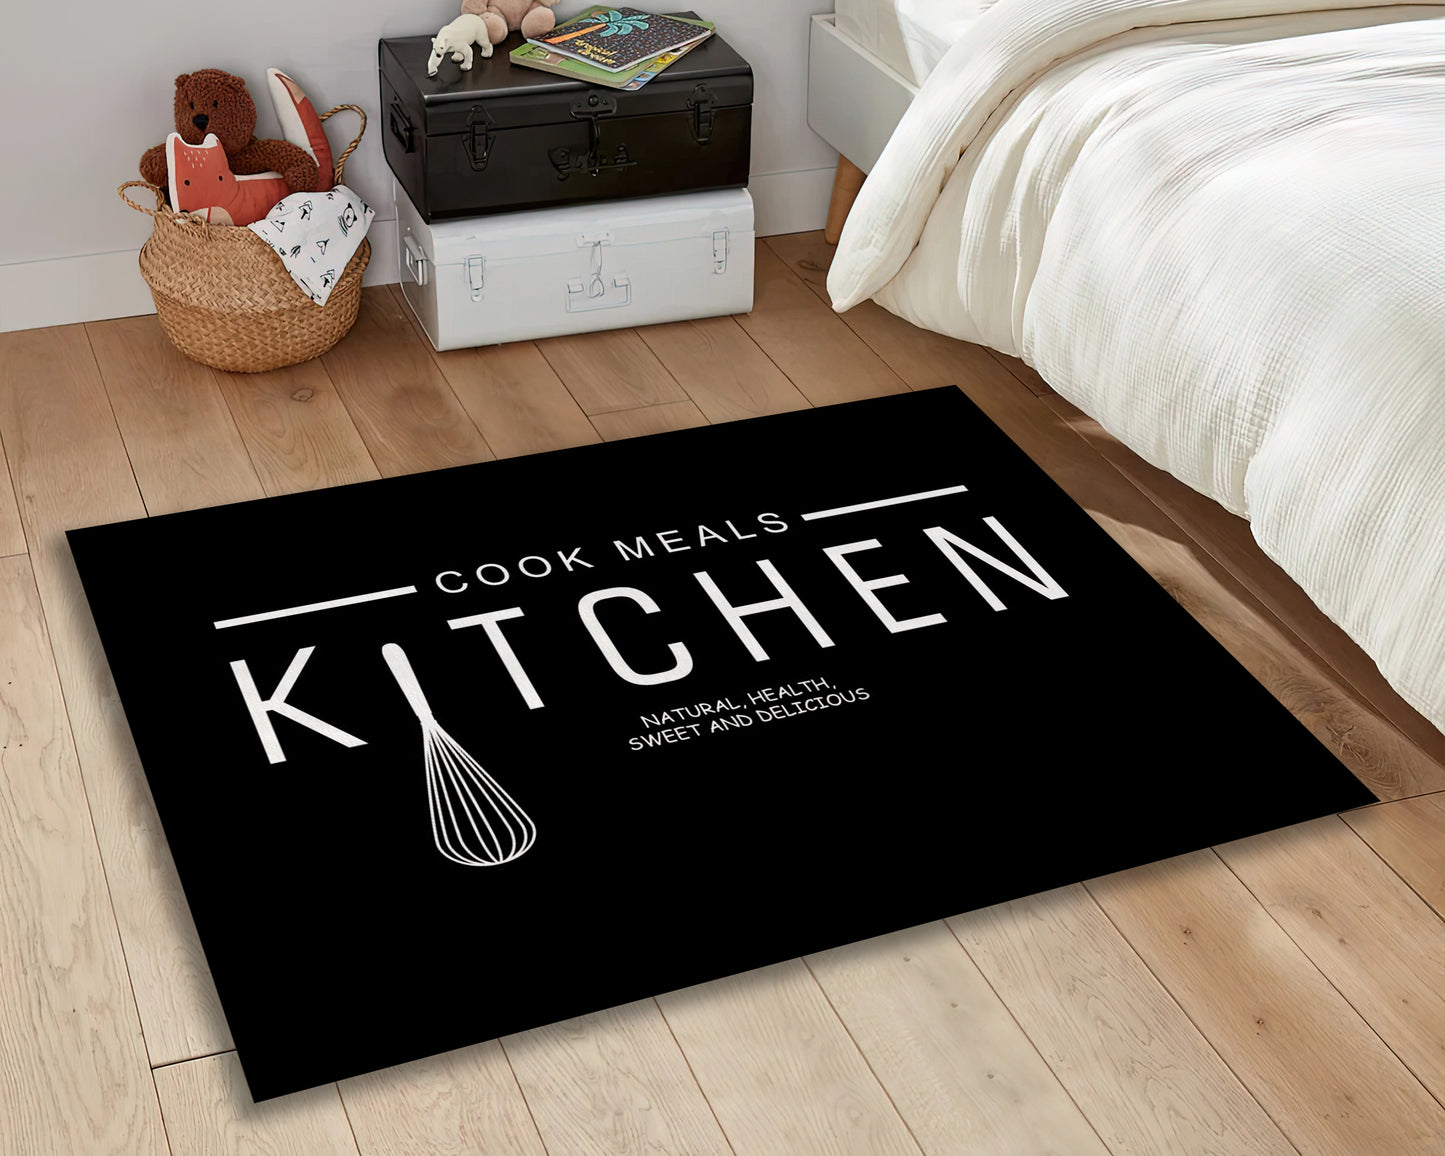 Black Kitchen Text Rug, Cooking Mat, Kitchen Bar Decor, Dining Room Carpet